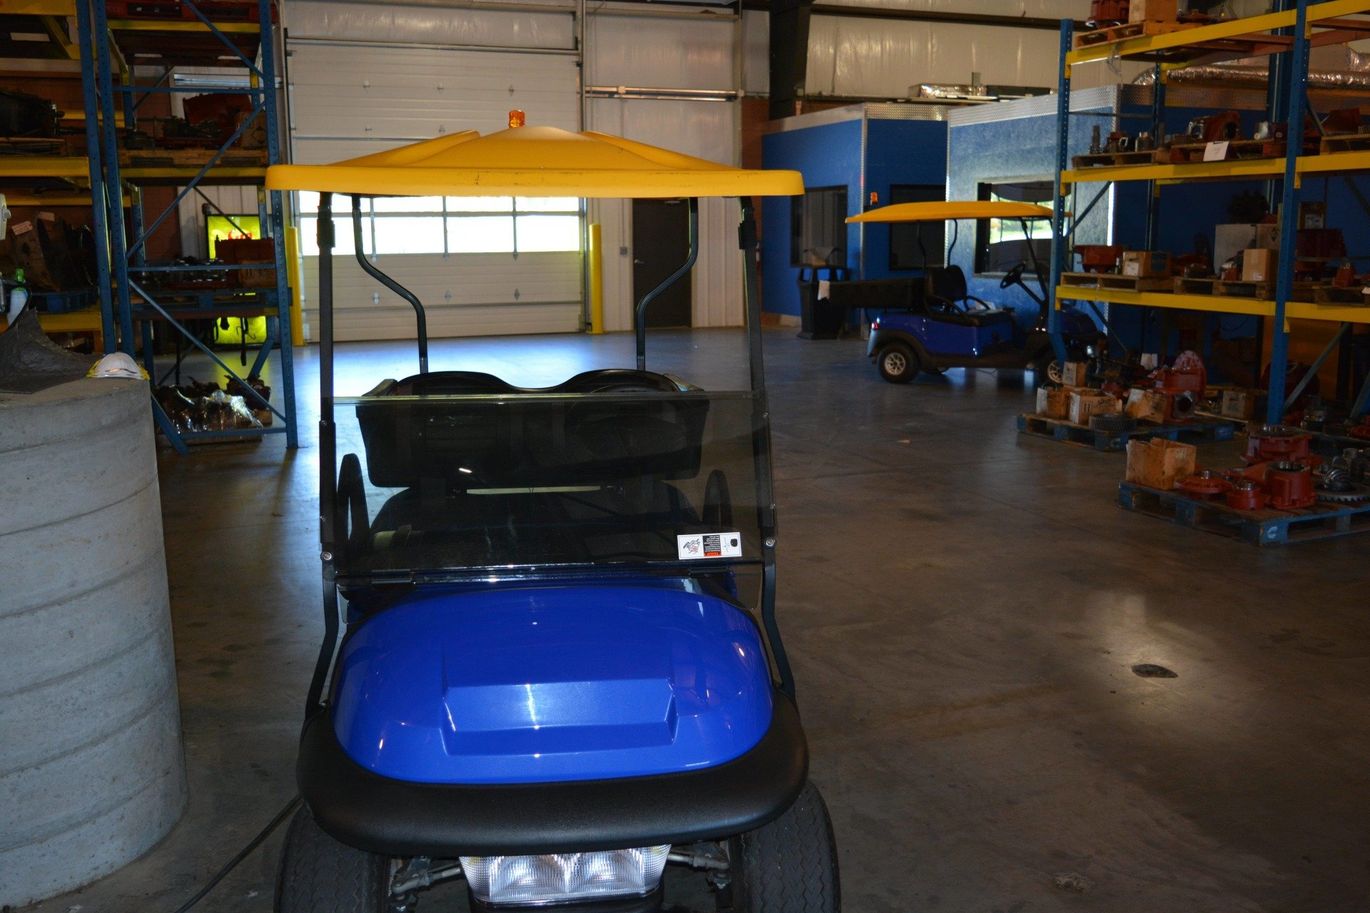 Cart in garage — Transmission Repair in Wilmington, NC